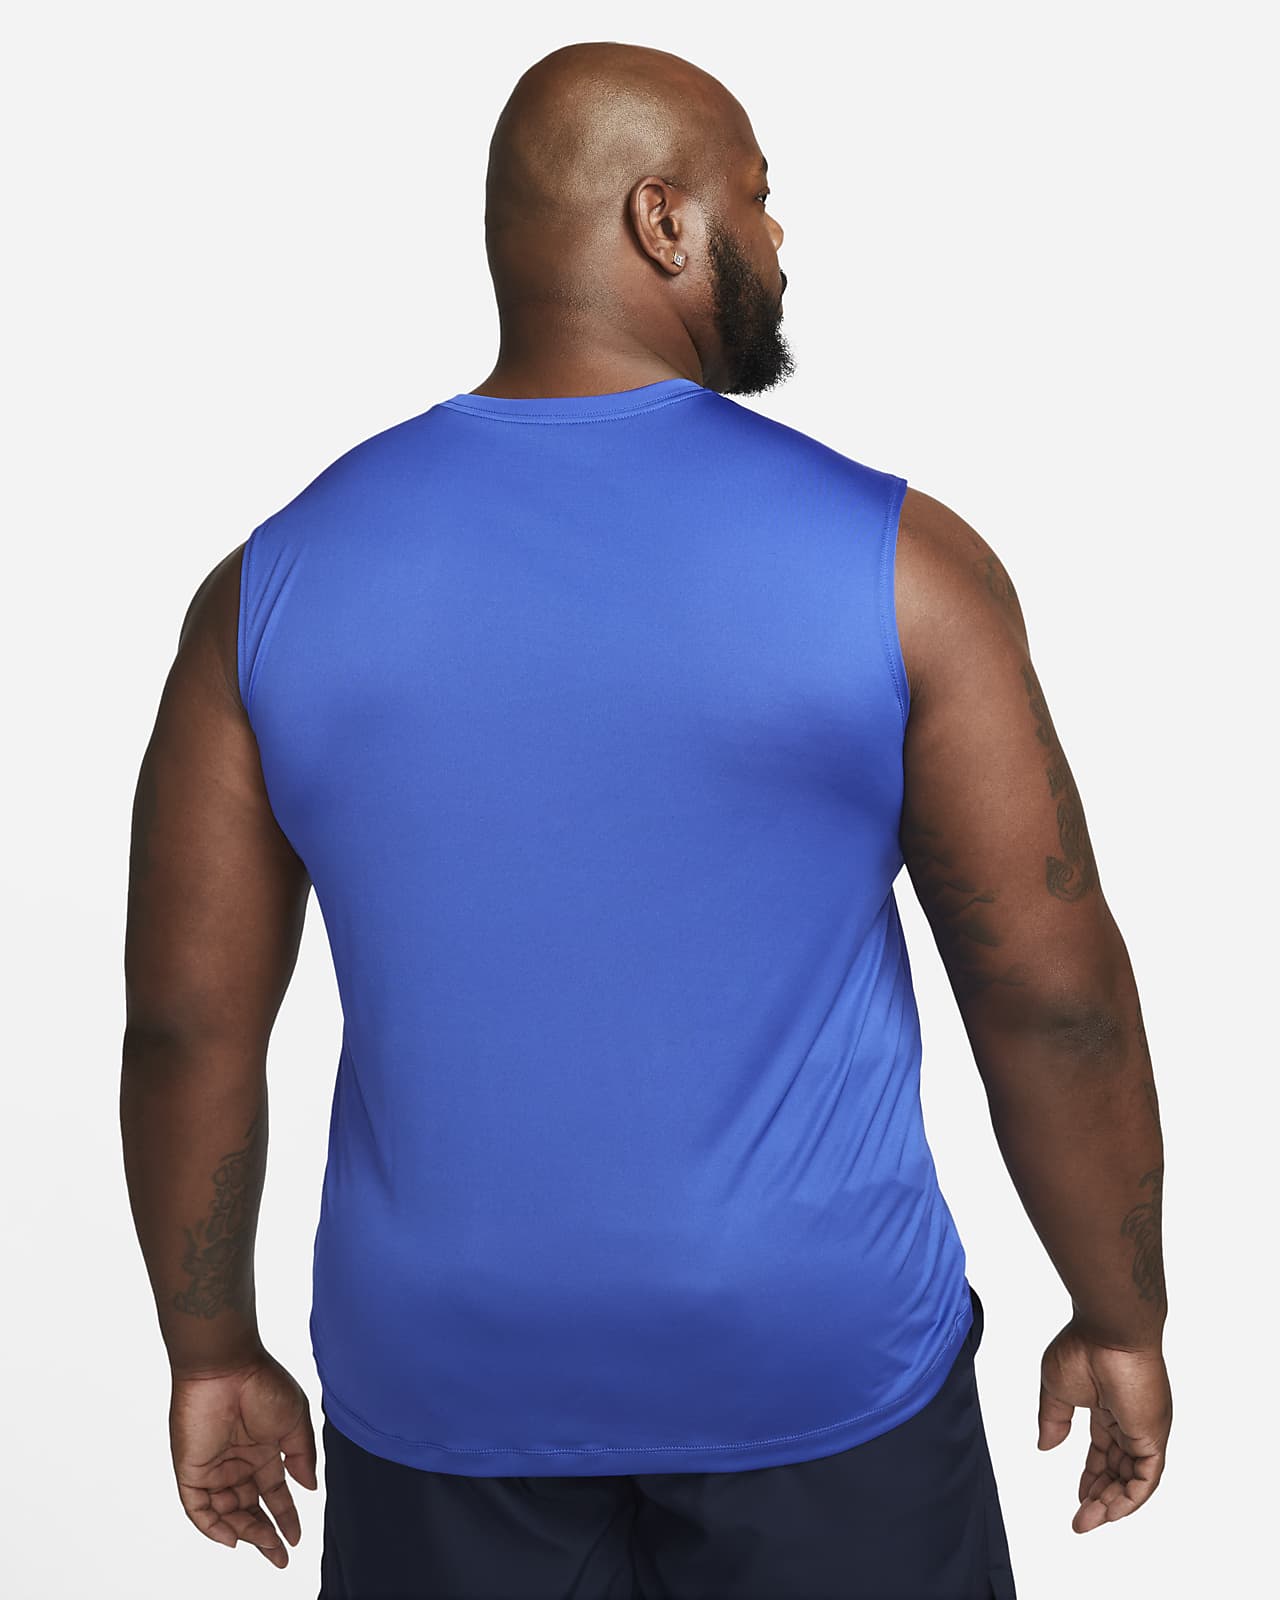 Nike Dri-FIT Legend Men's Sleeveless Fitness T-Shirt.